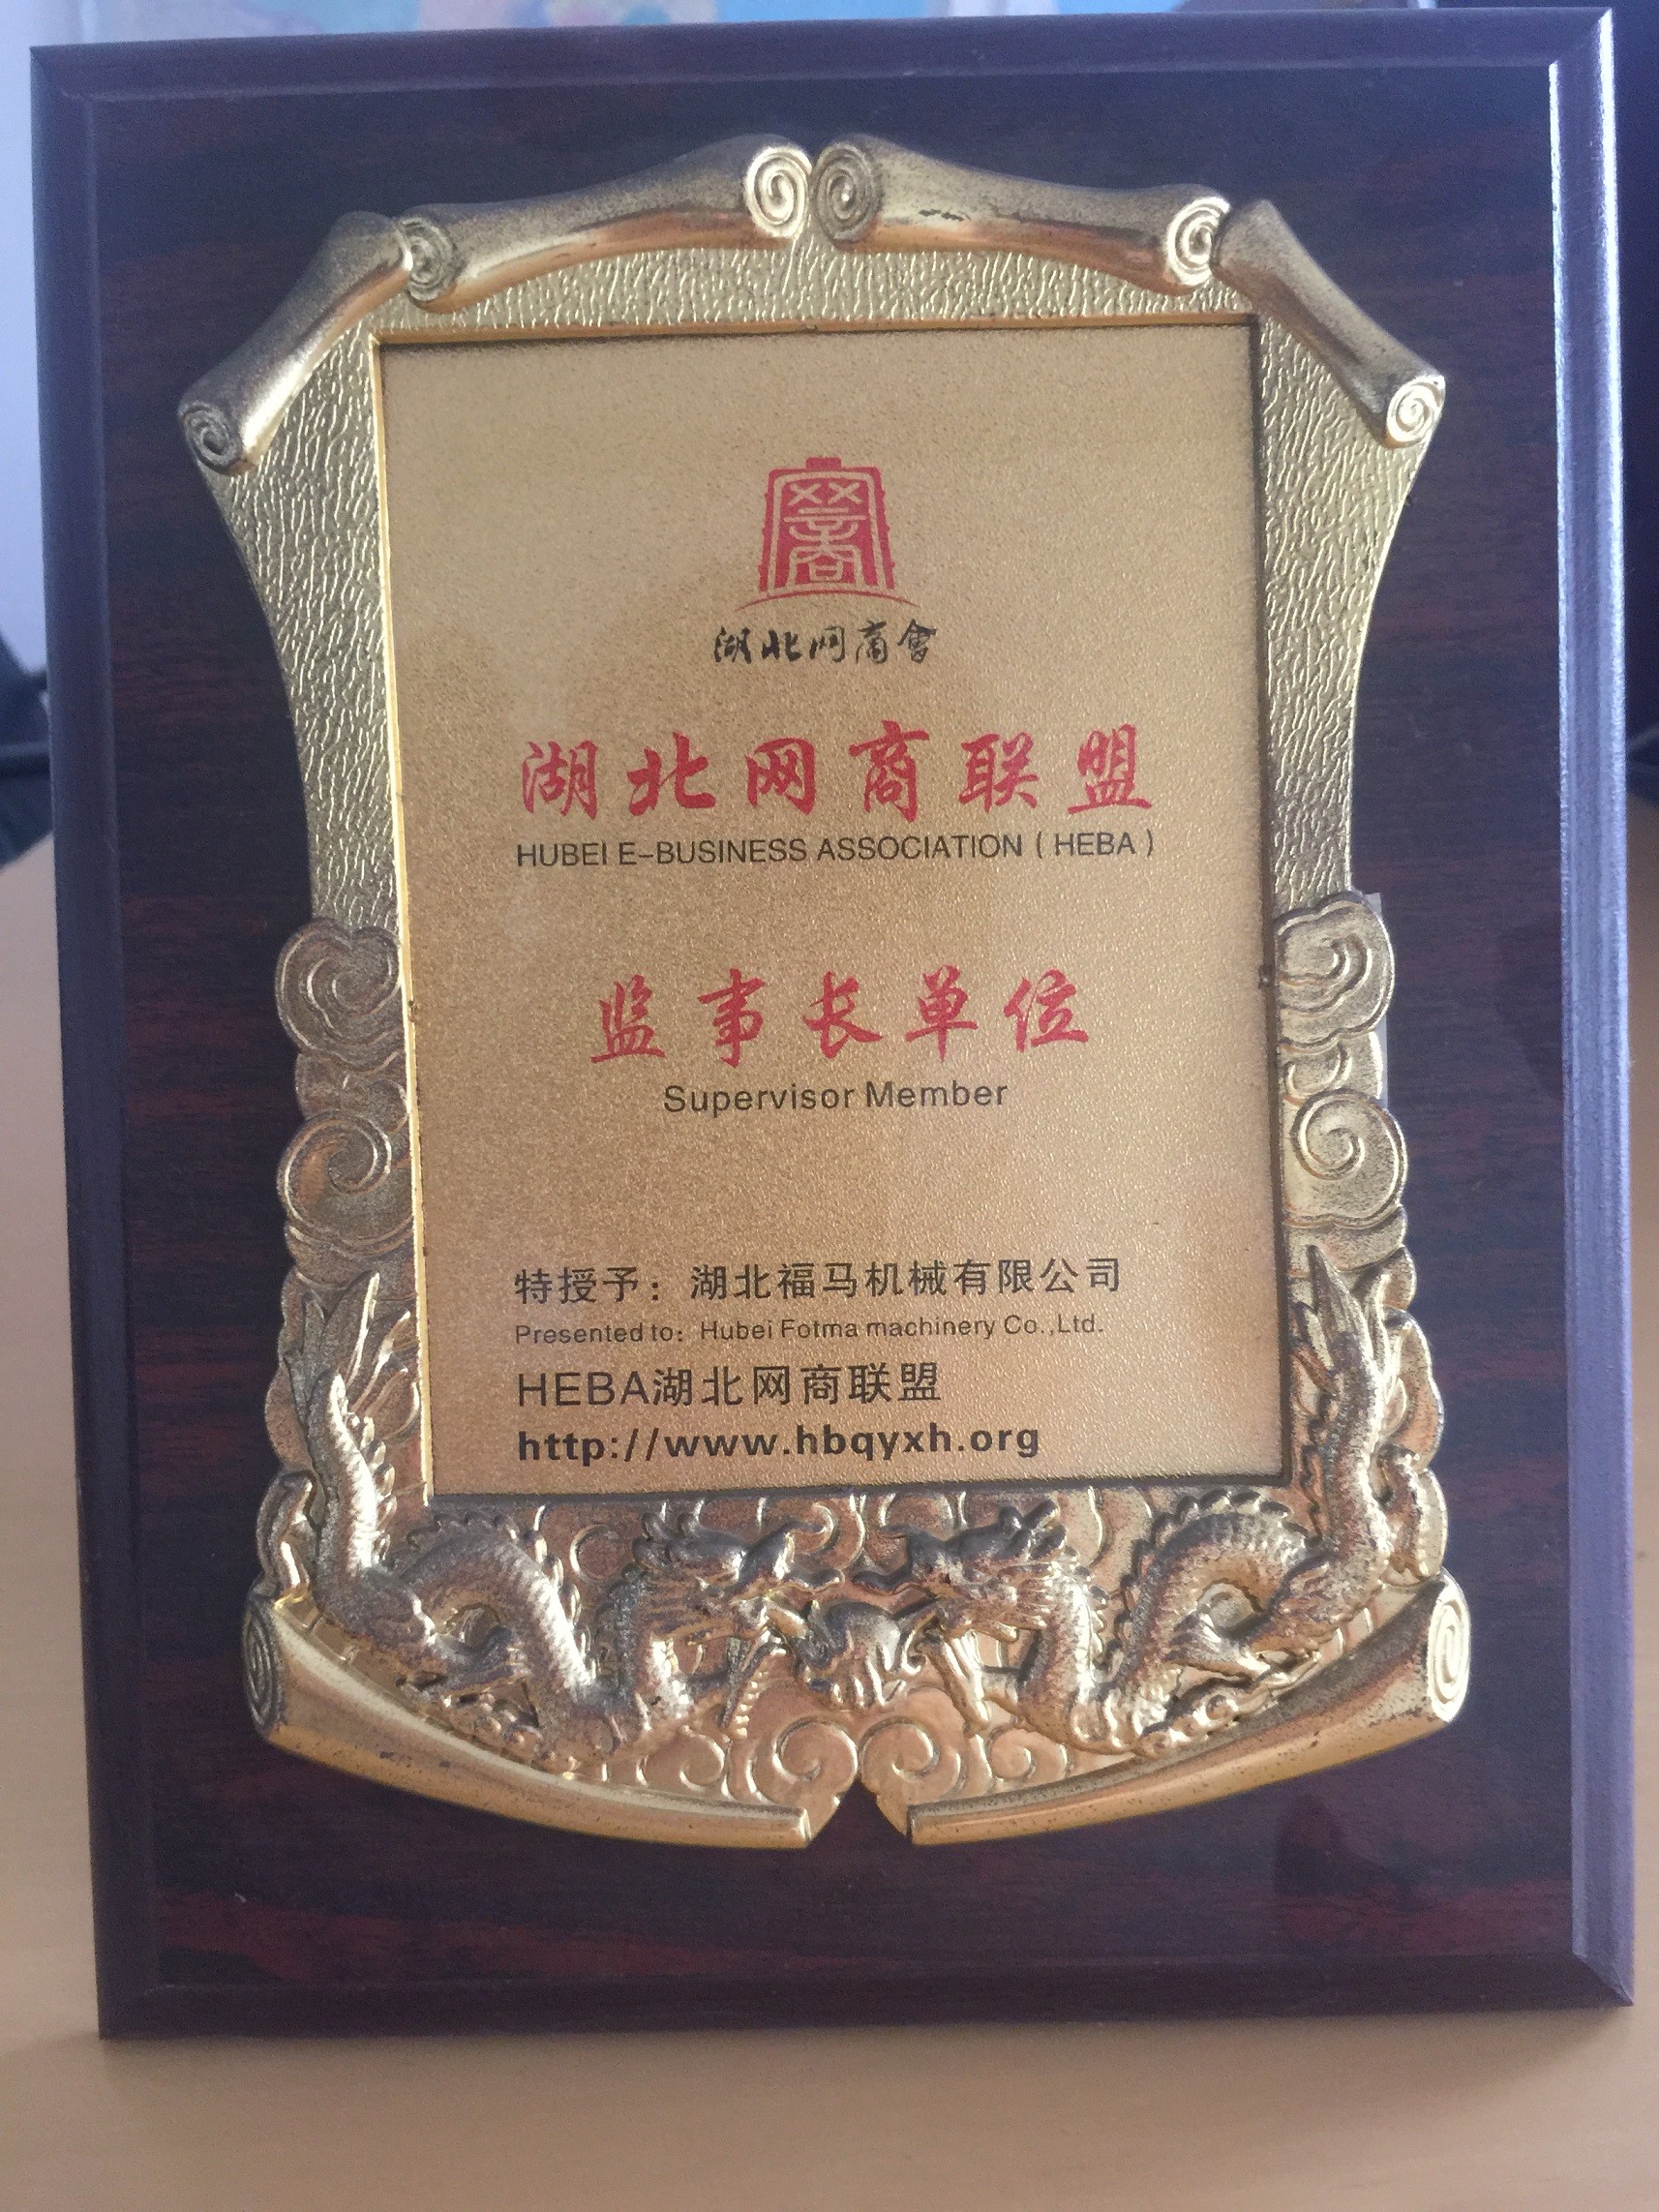 Hubei Fotma Machinery Co., Ltd. Certifications